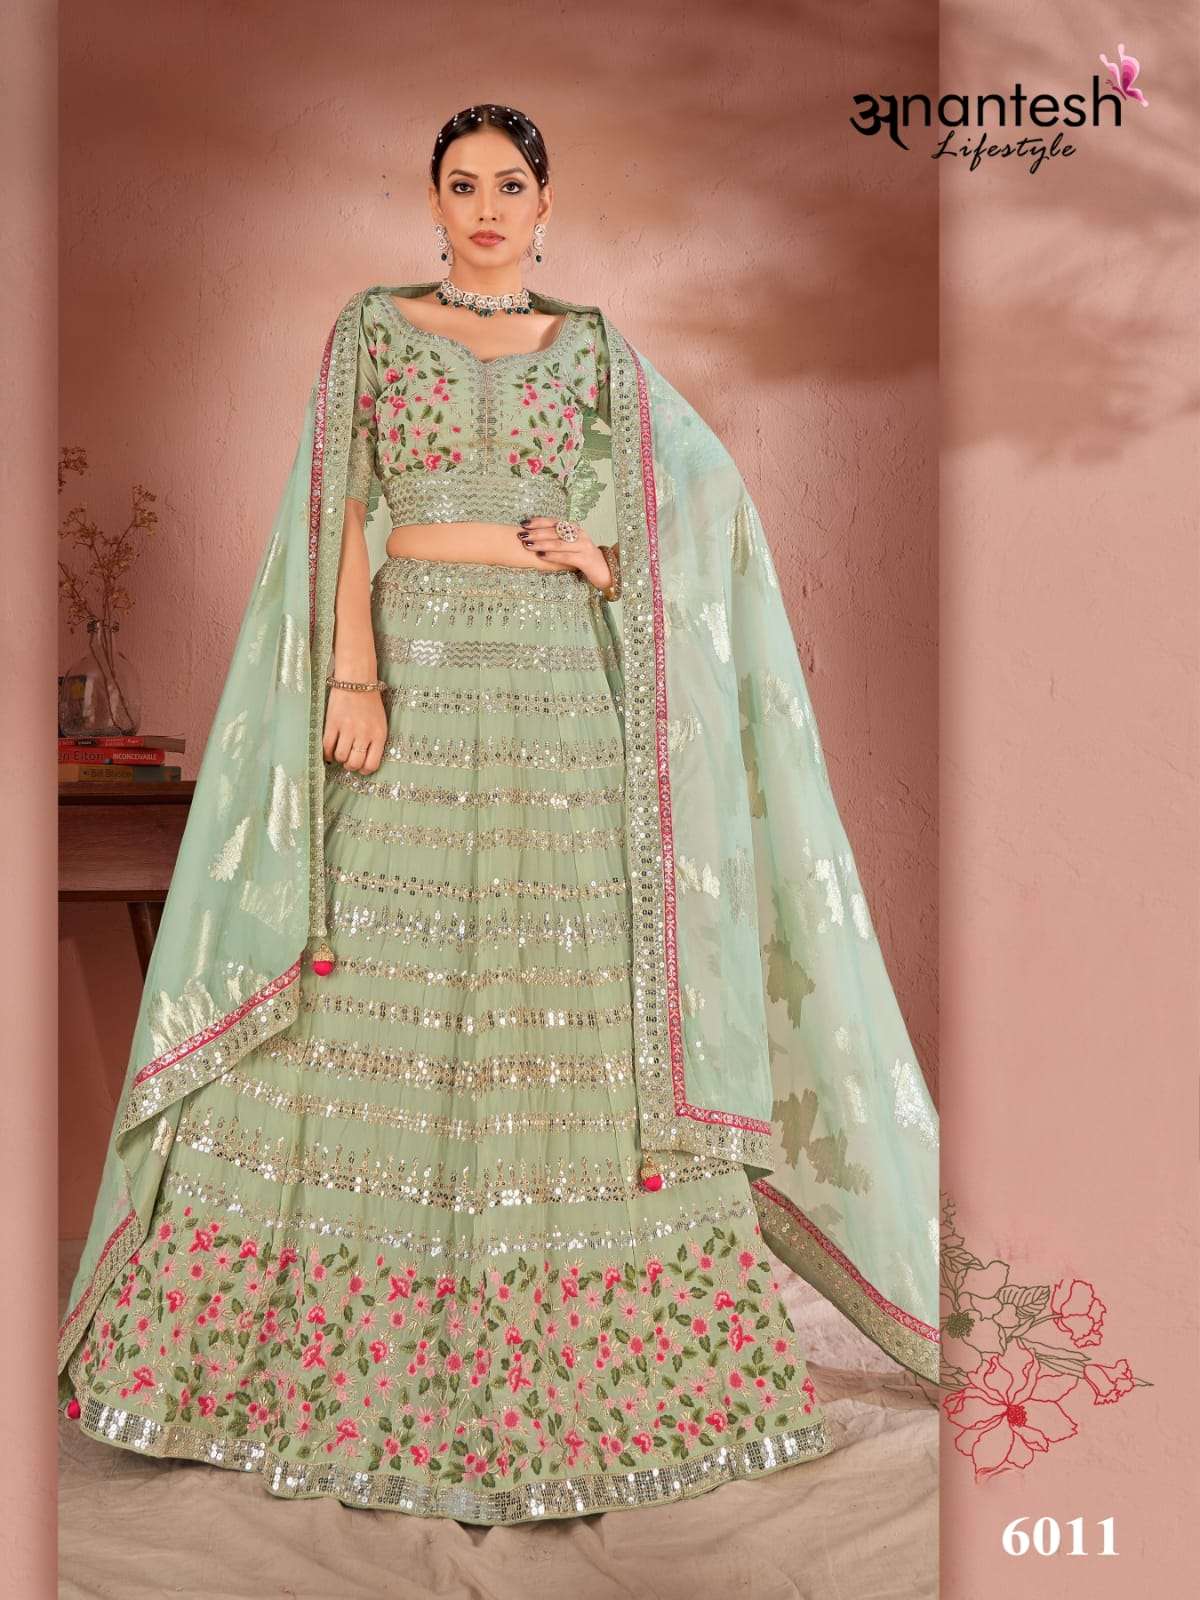 anantesh lifestyle maharani vol-2 6007-6011 series latest designer wedding lehenga wholesaler surat gujarat